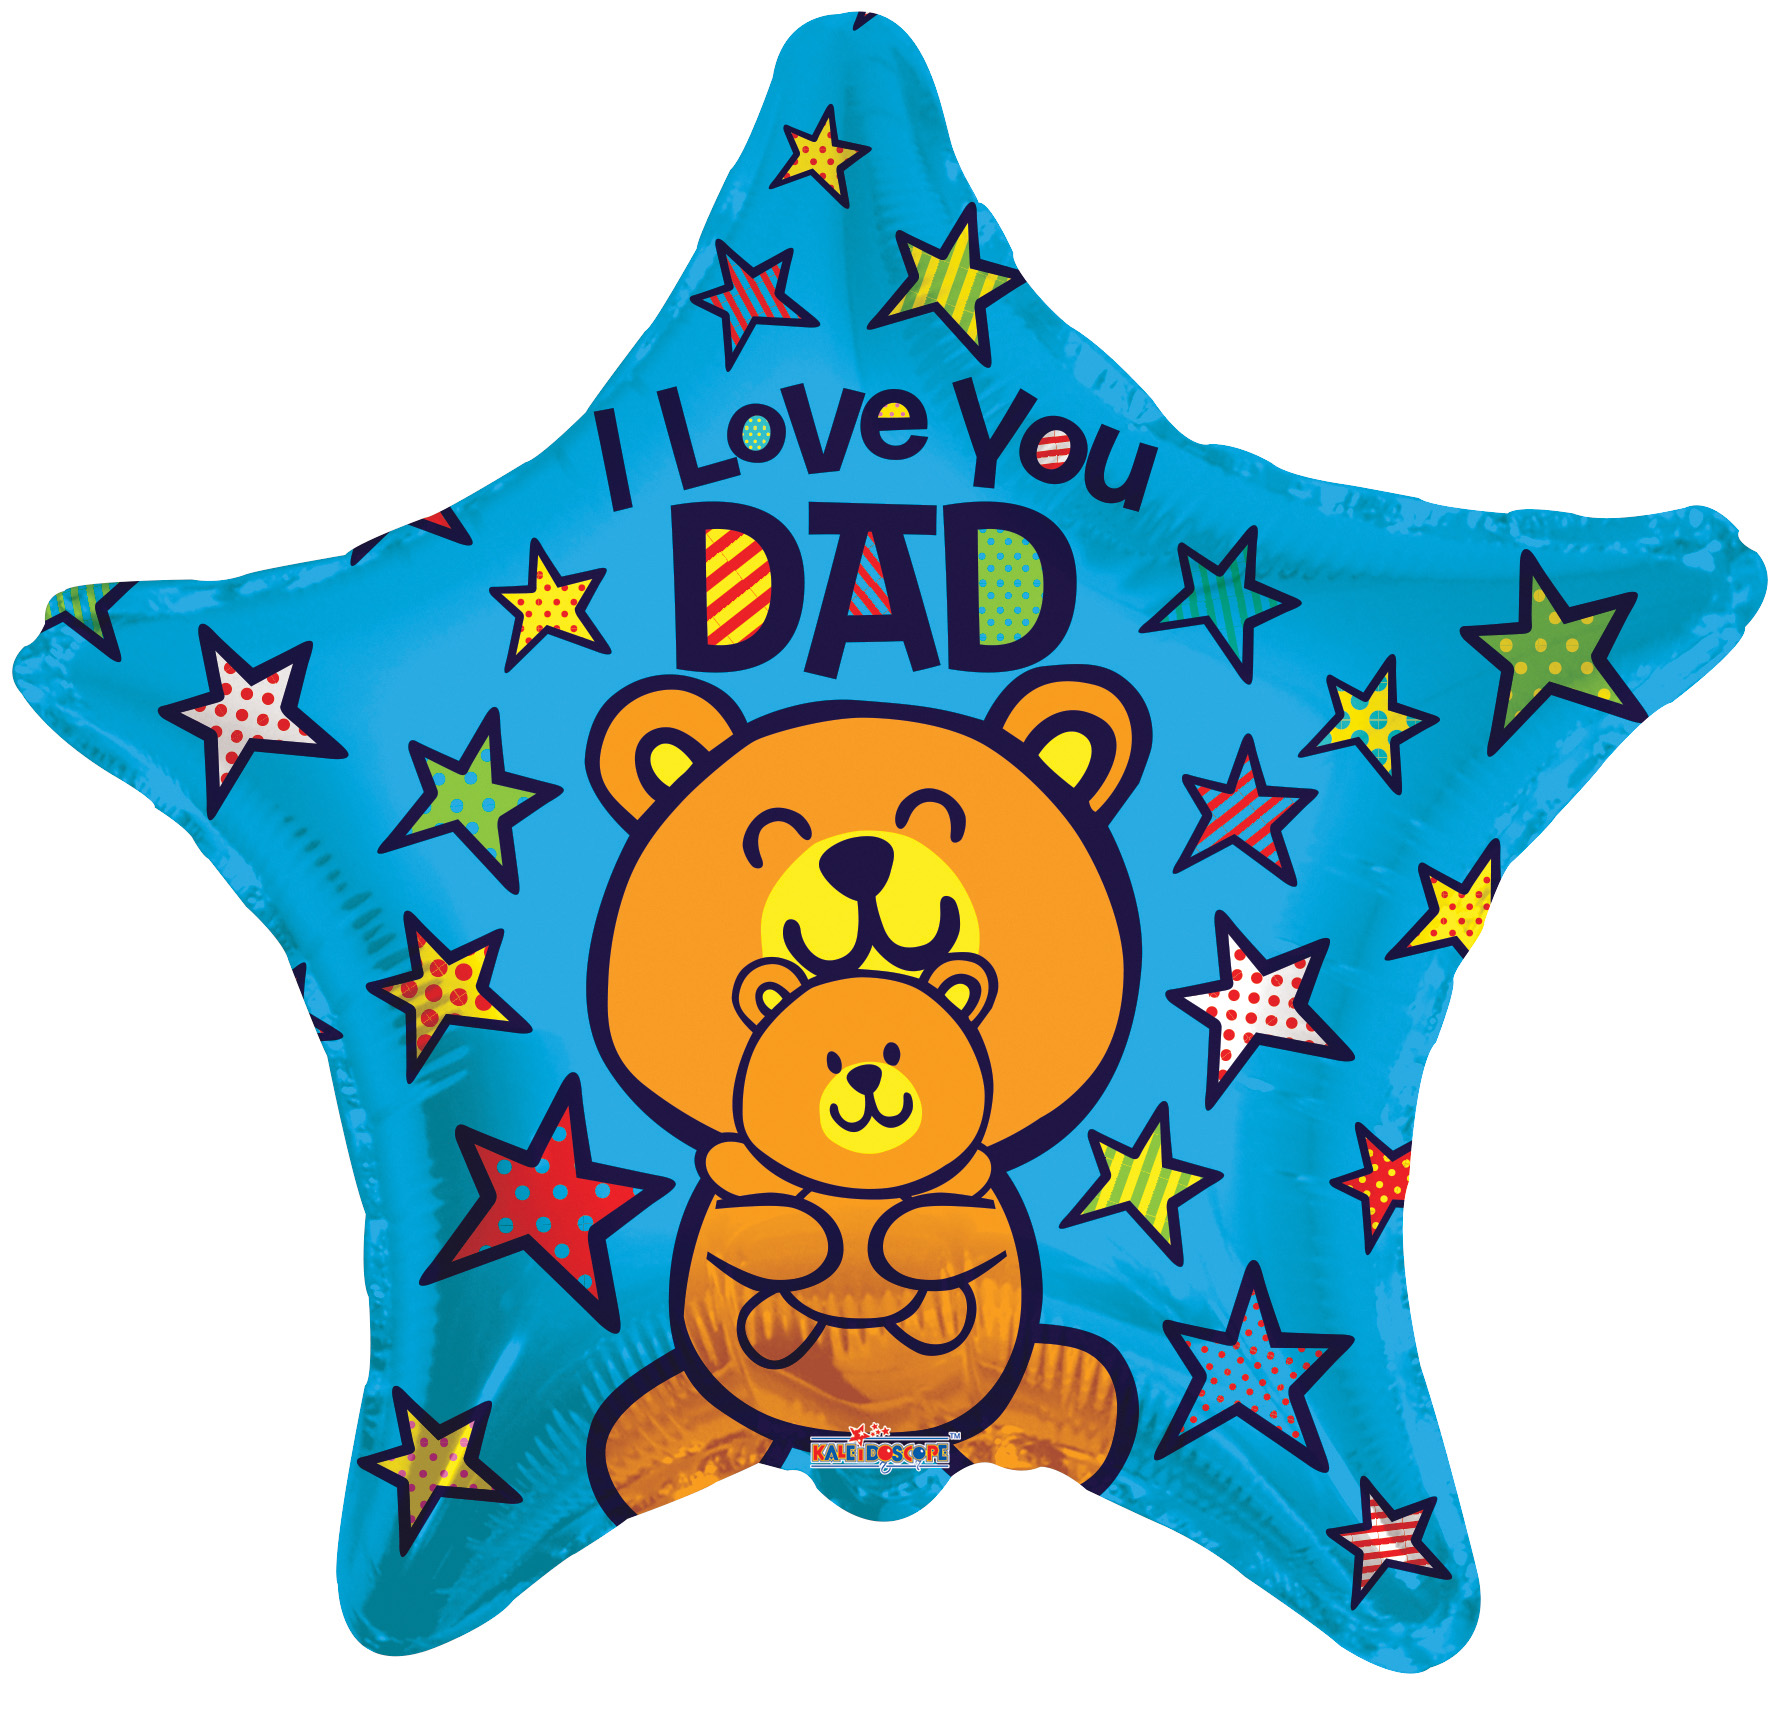 18 Love You Dad Bears Balloon Bargain Balloons Mylar Balloons And Foil Balloons